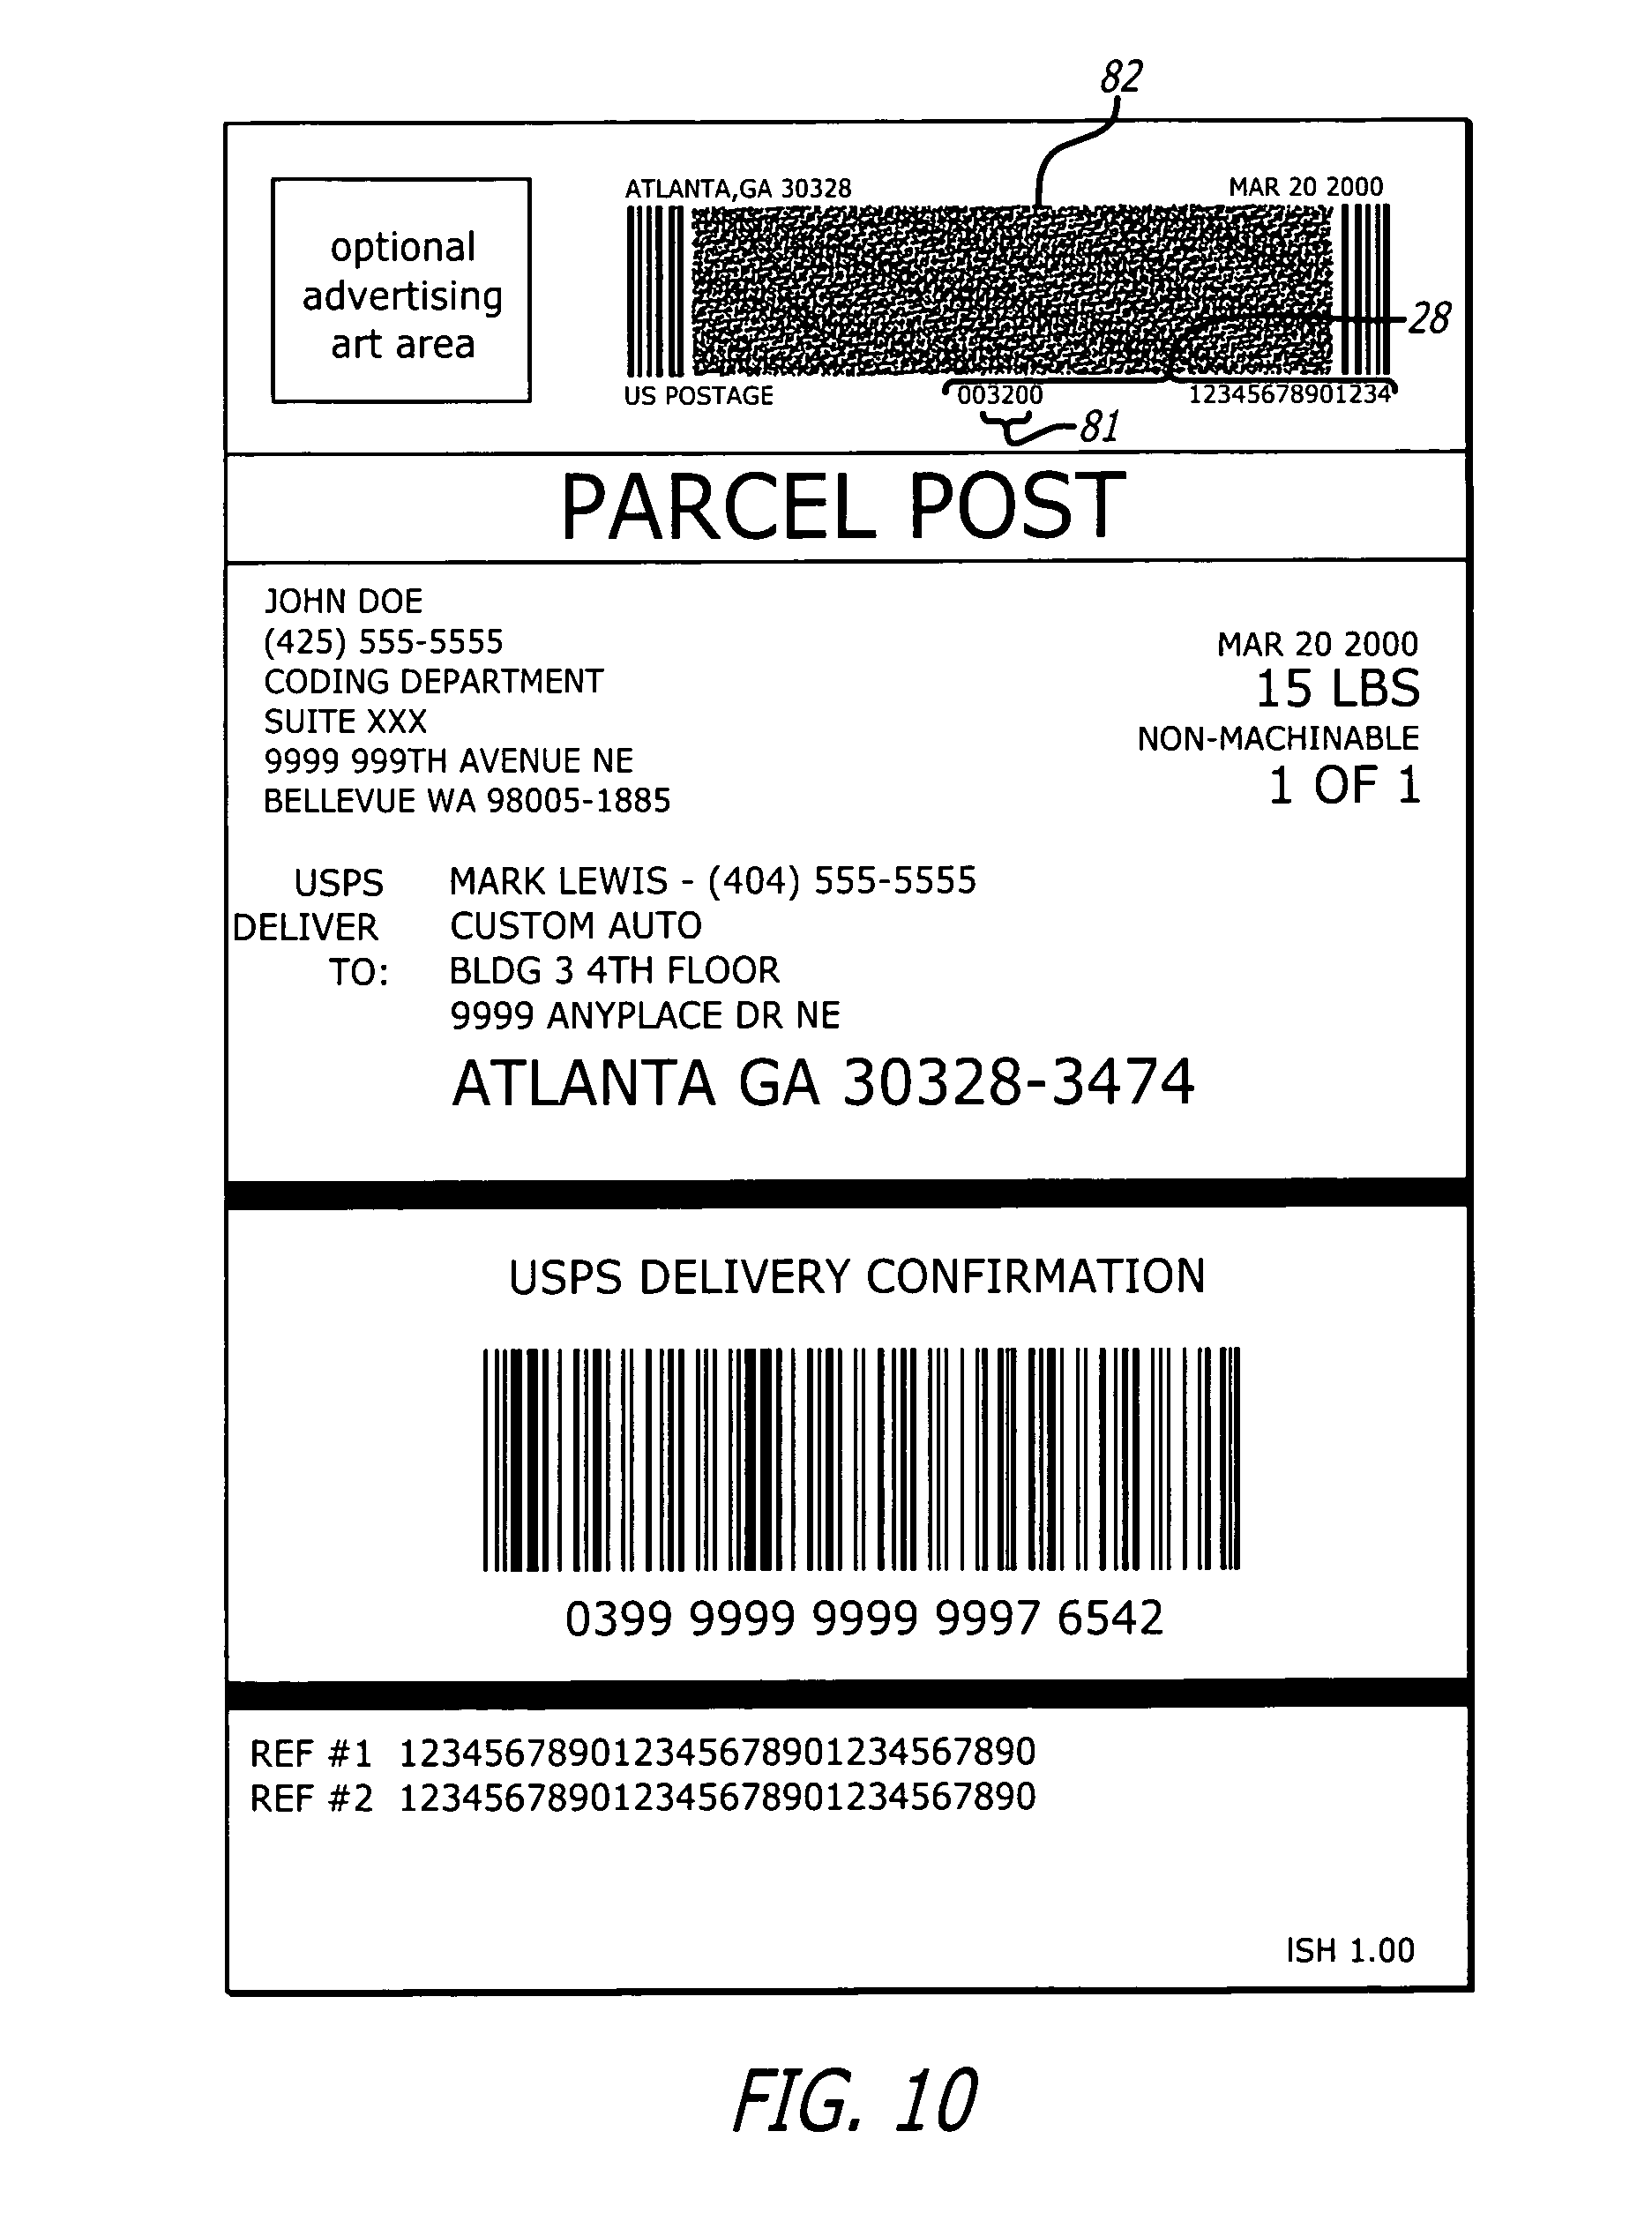 shipping label sample